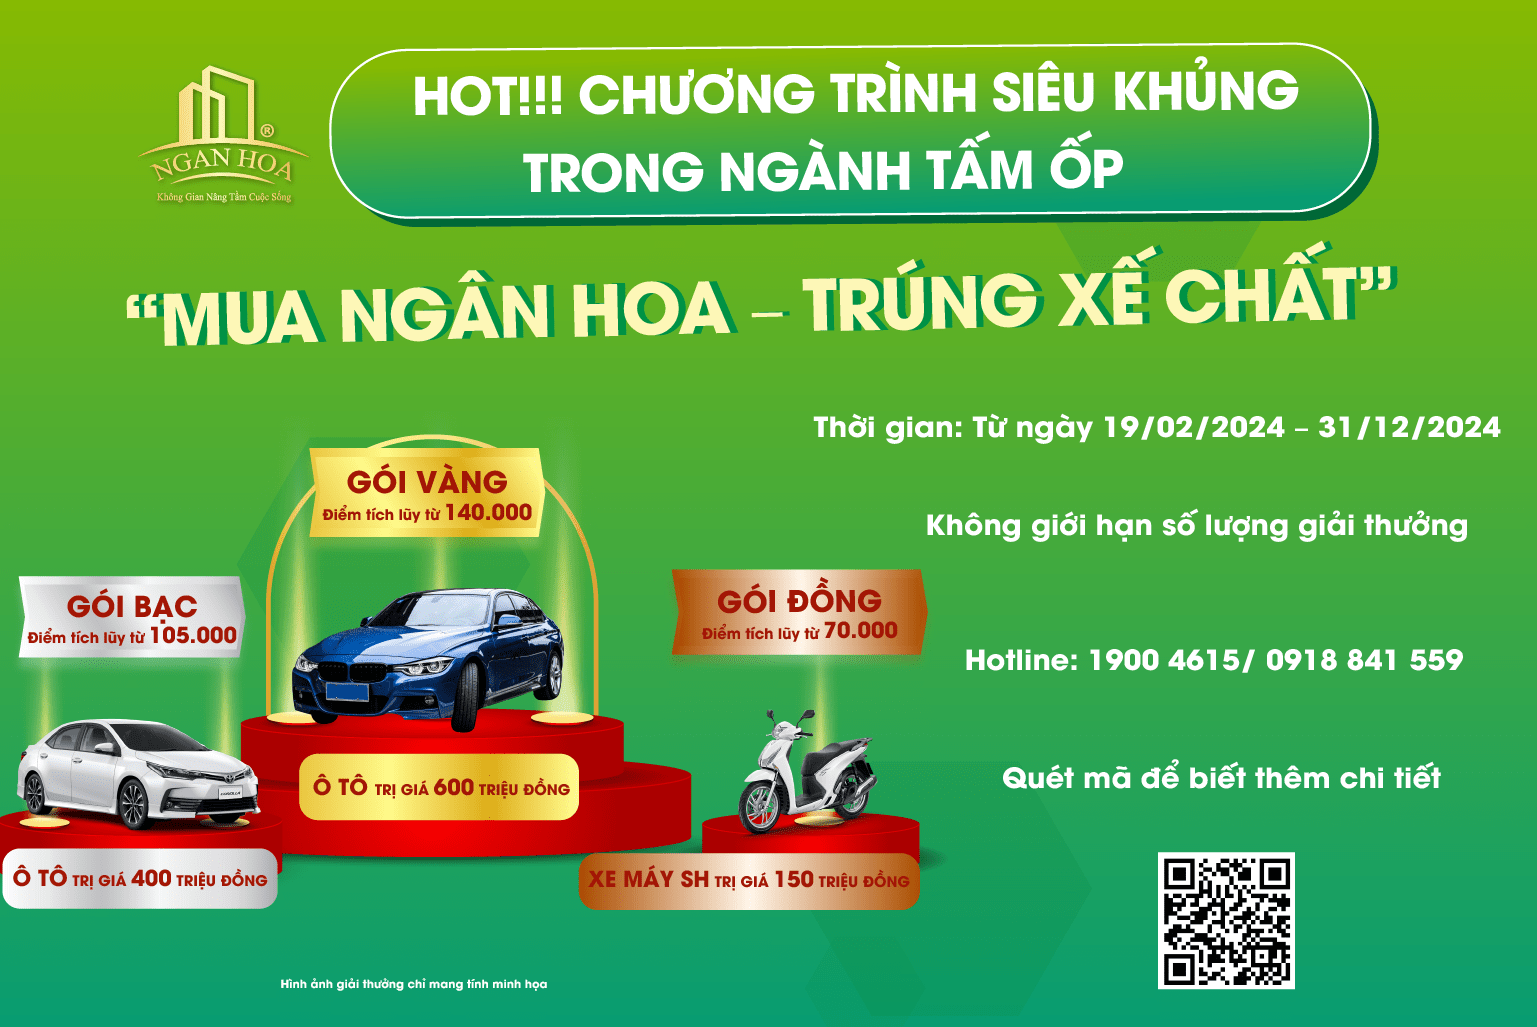 chuong trinh hot bai dang web